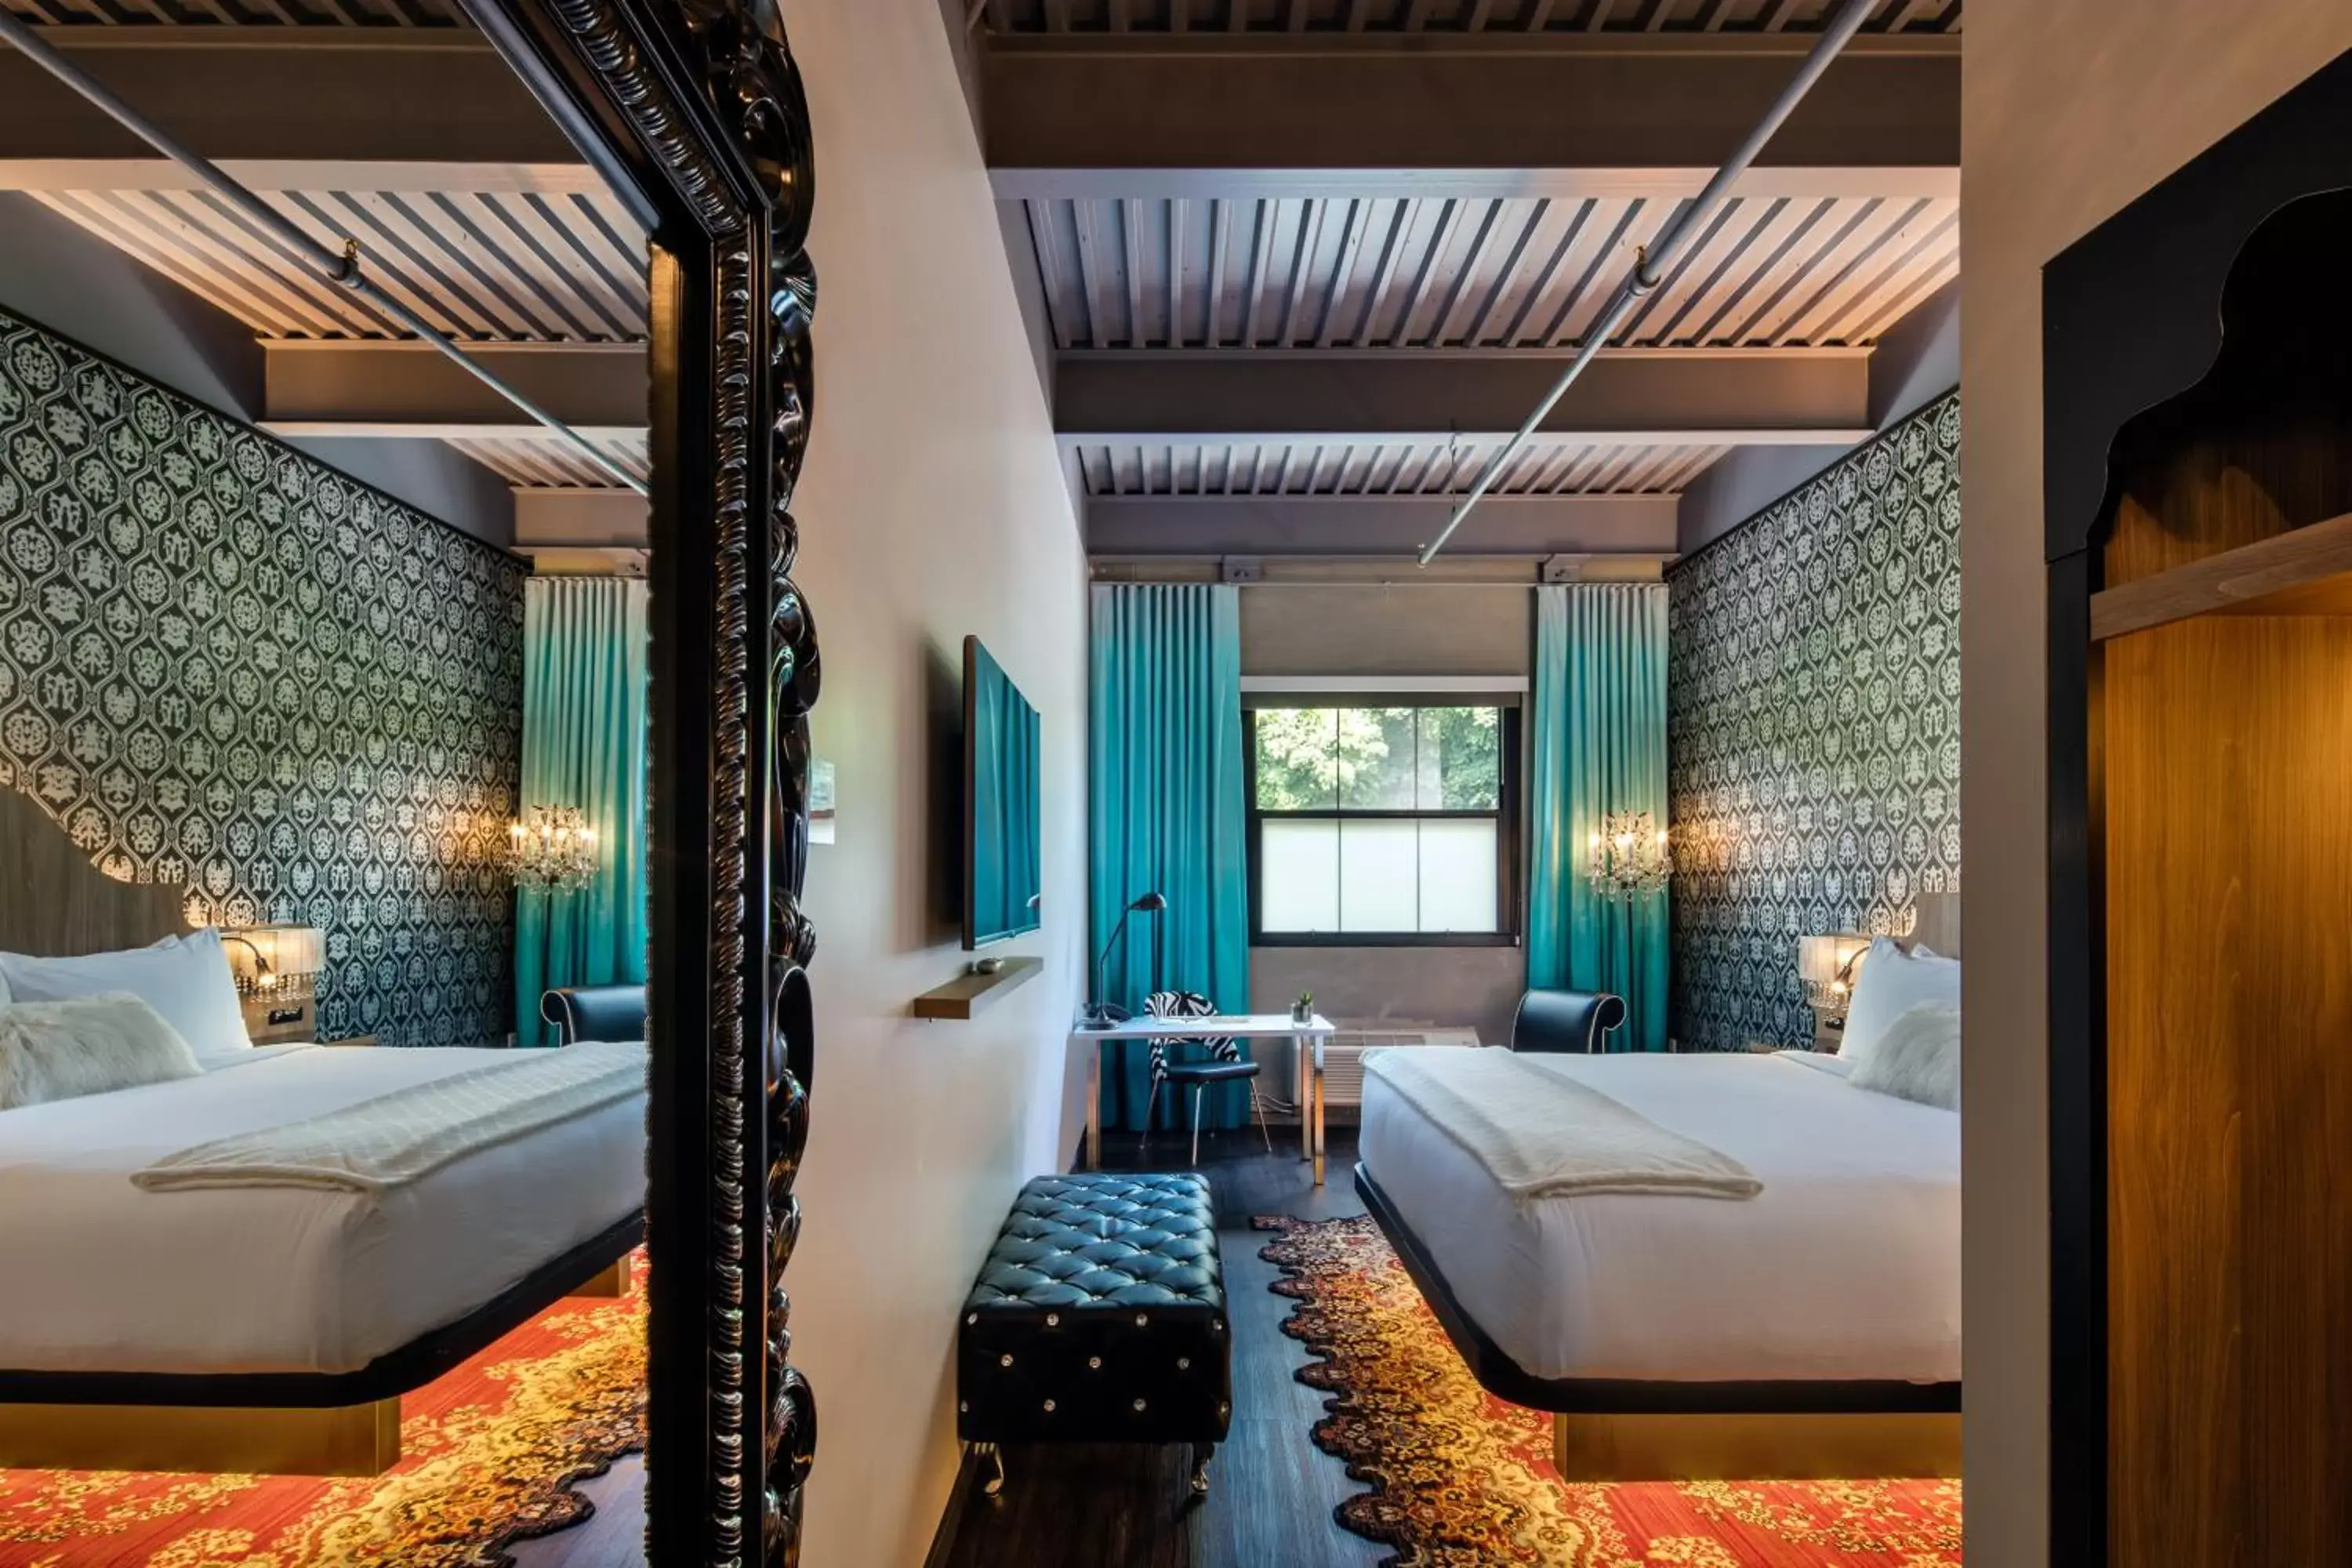 Bed, Room Photo in Hotel Nyack, a JdV by Hyatt Hotel